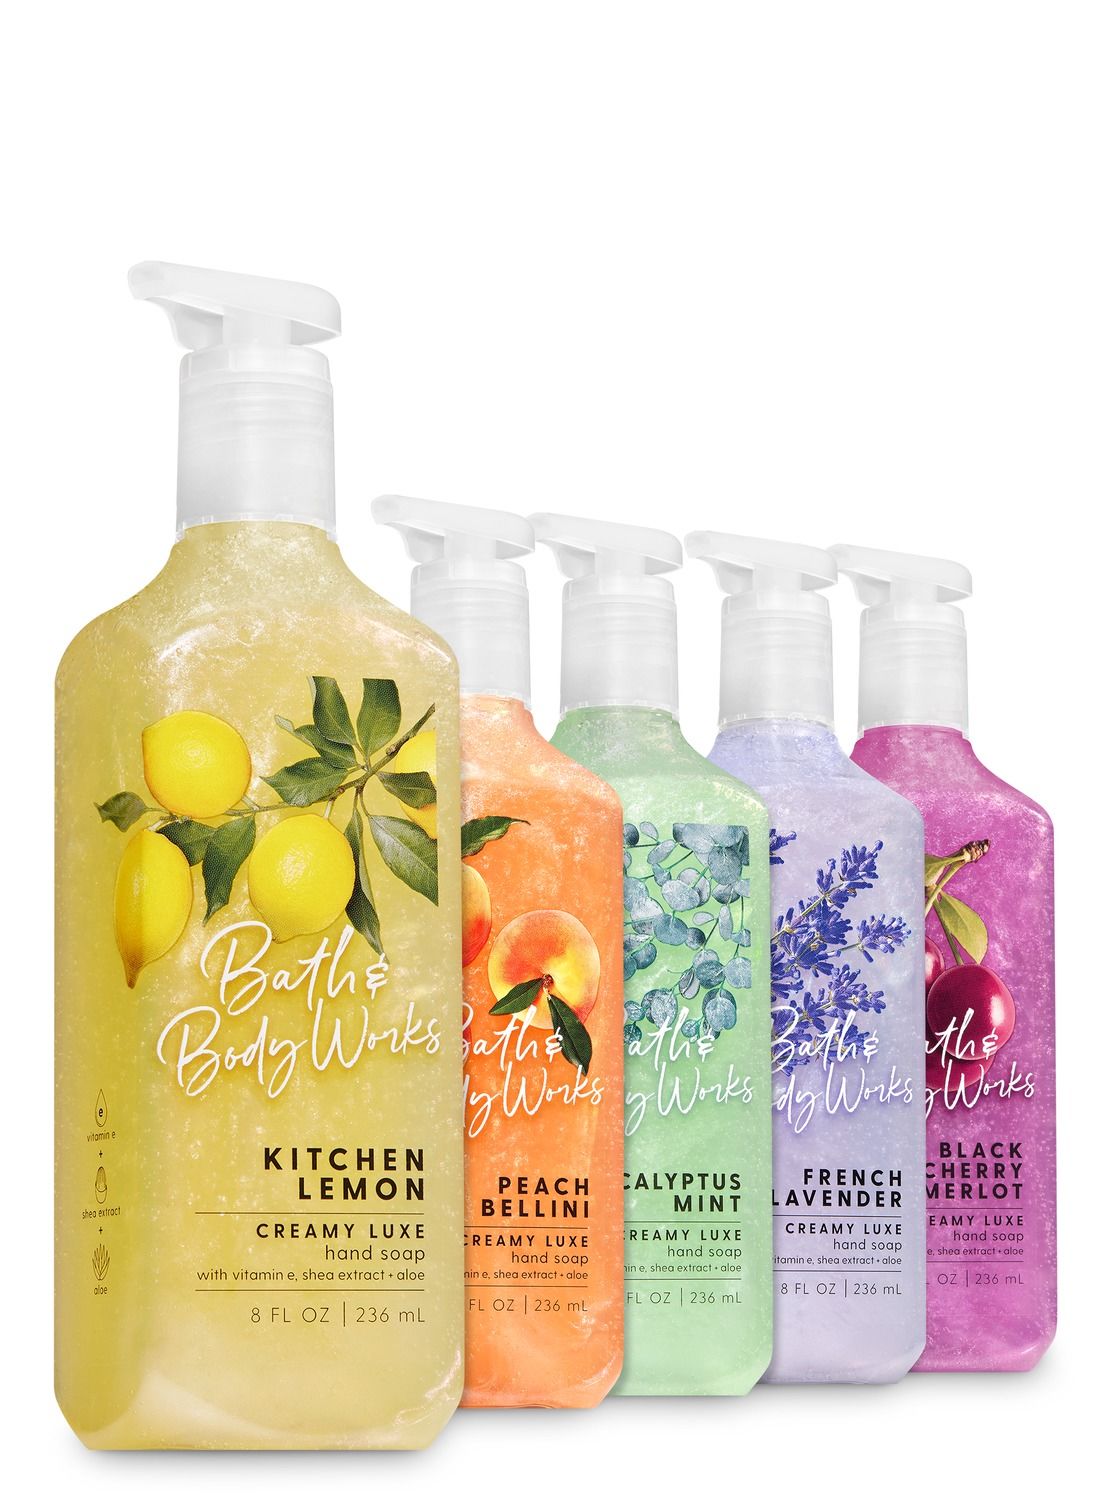 8. Bath & Body Works Creamy Luxe Hand Soap